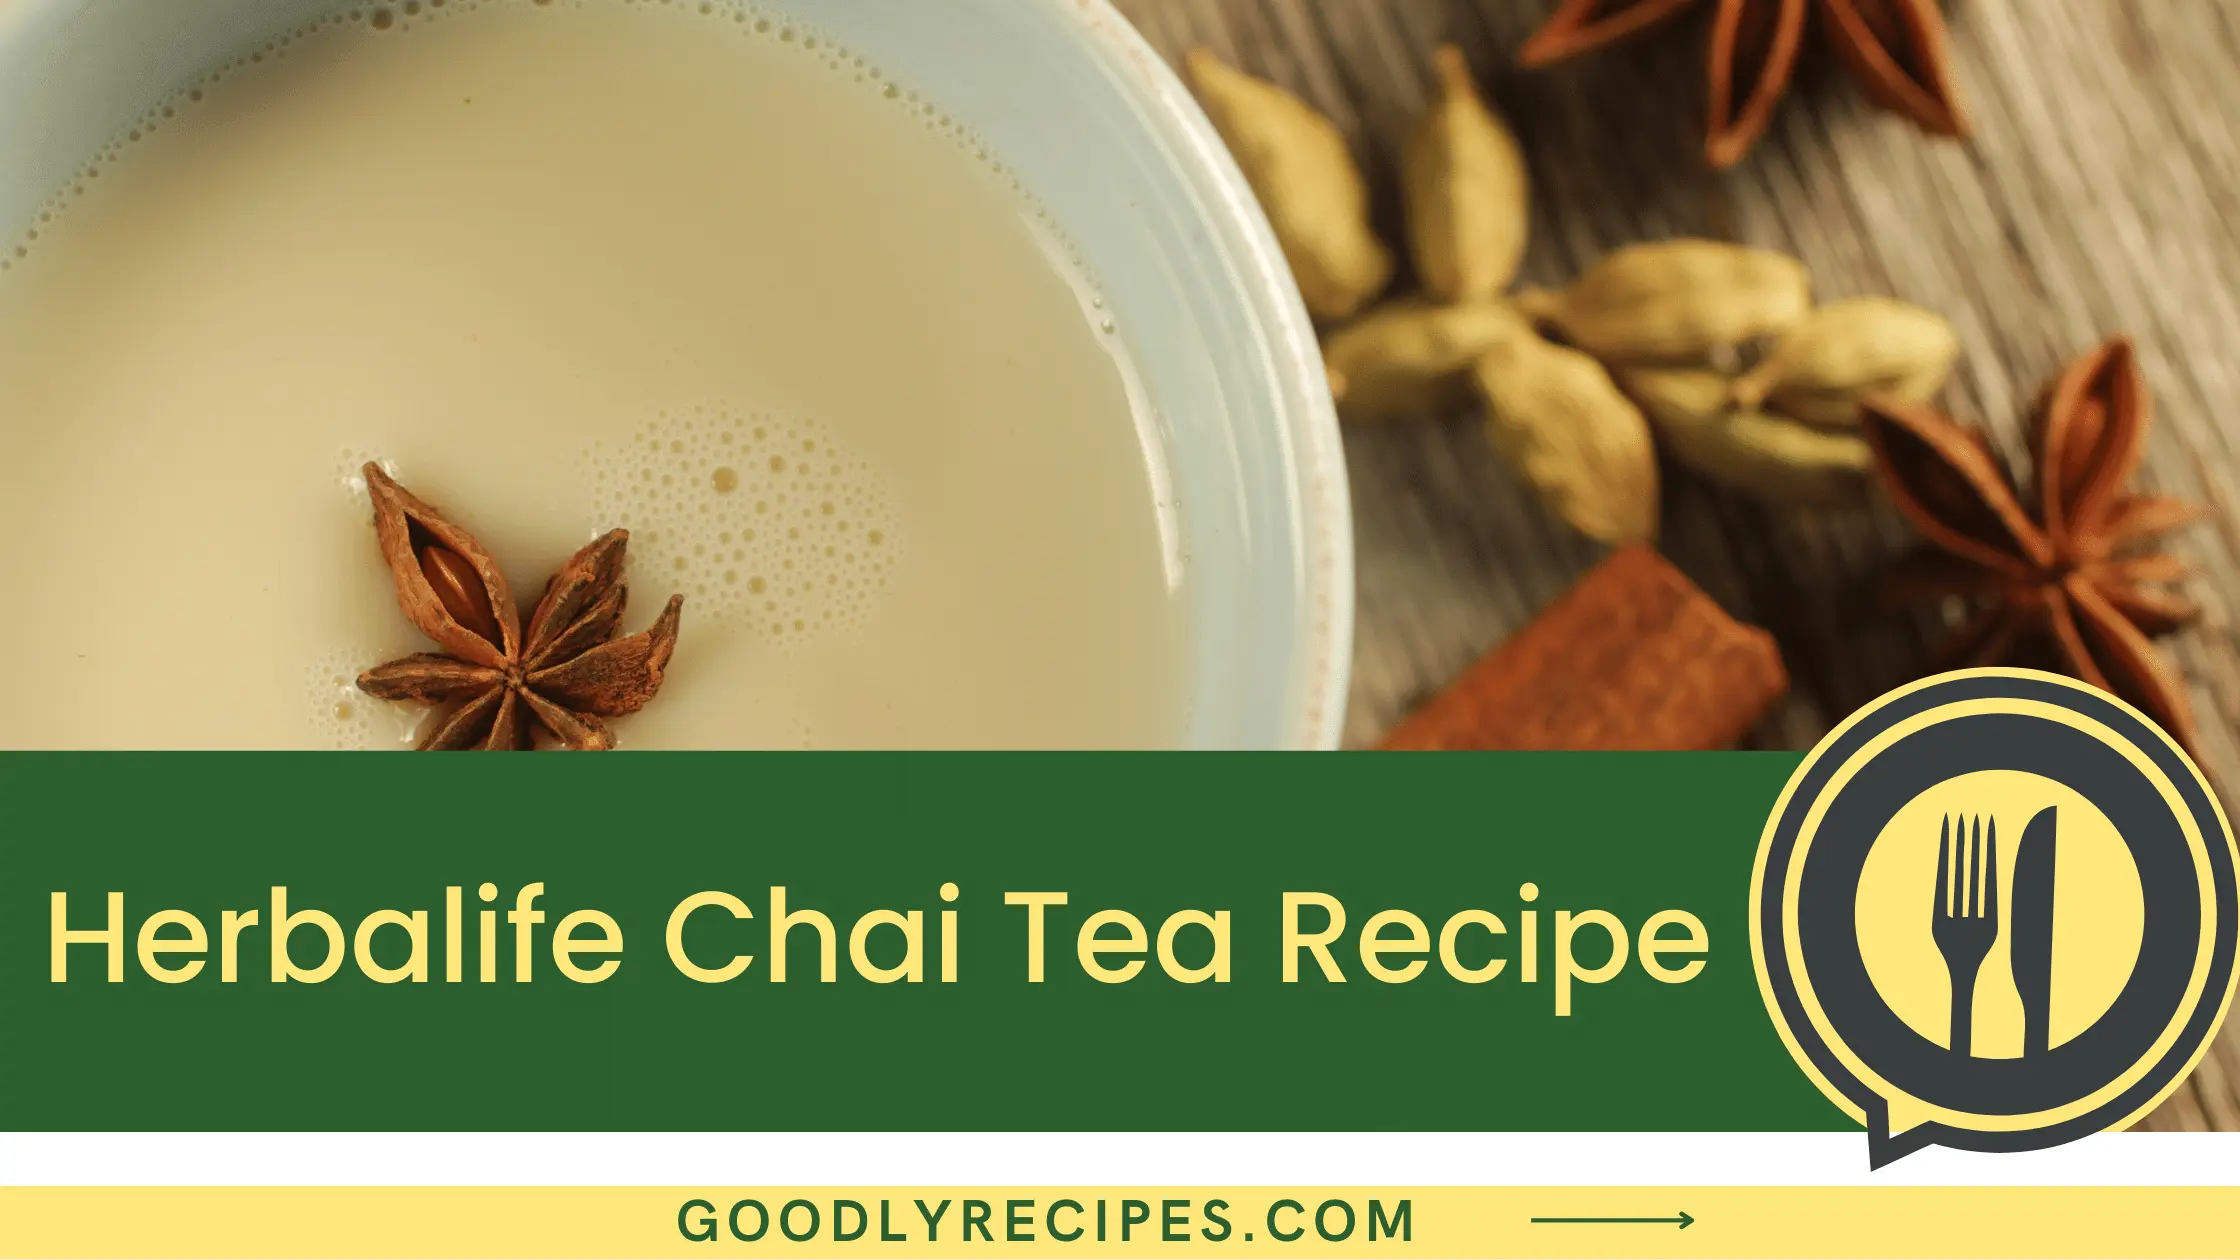 What is Herbalife Chai Tea?